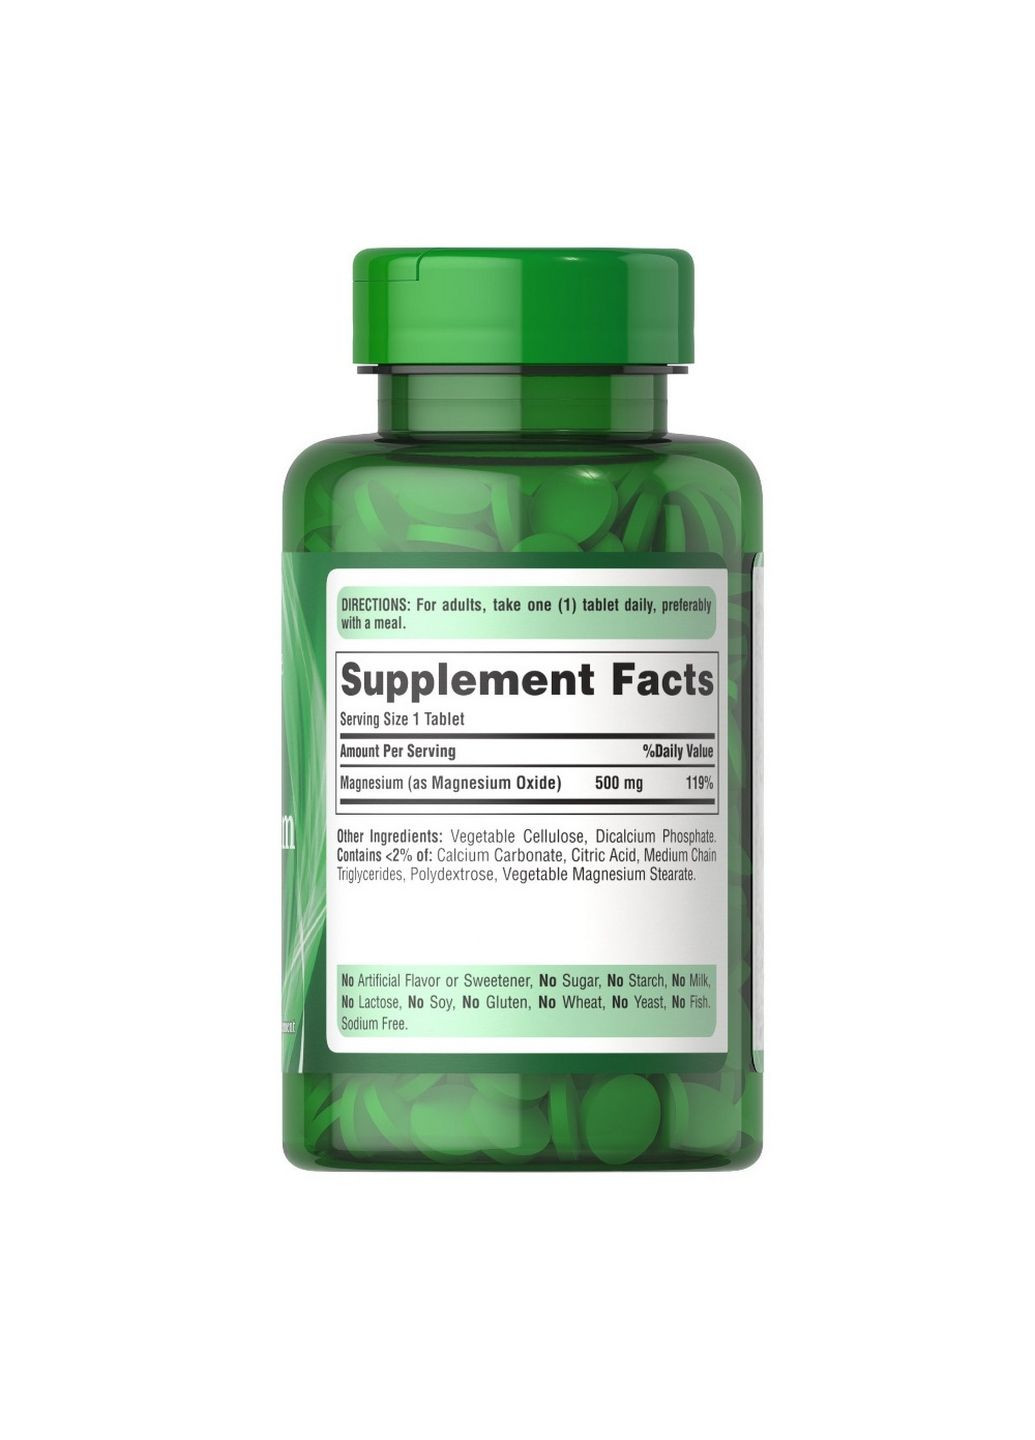 Витамины и минералы High Potency Magnesium 500 mg, 100 таблеток Puritans Pride (293481823)